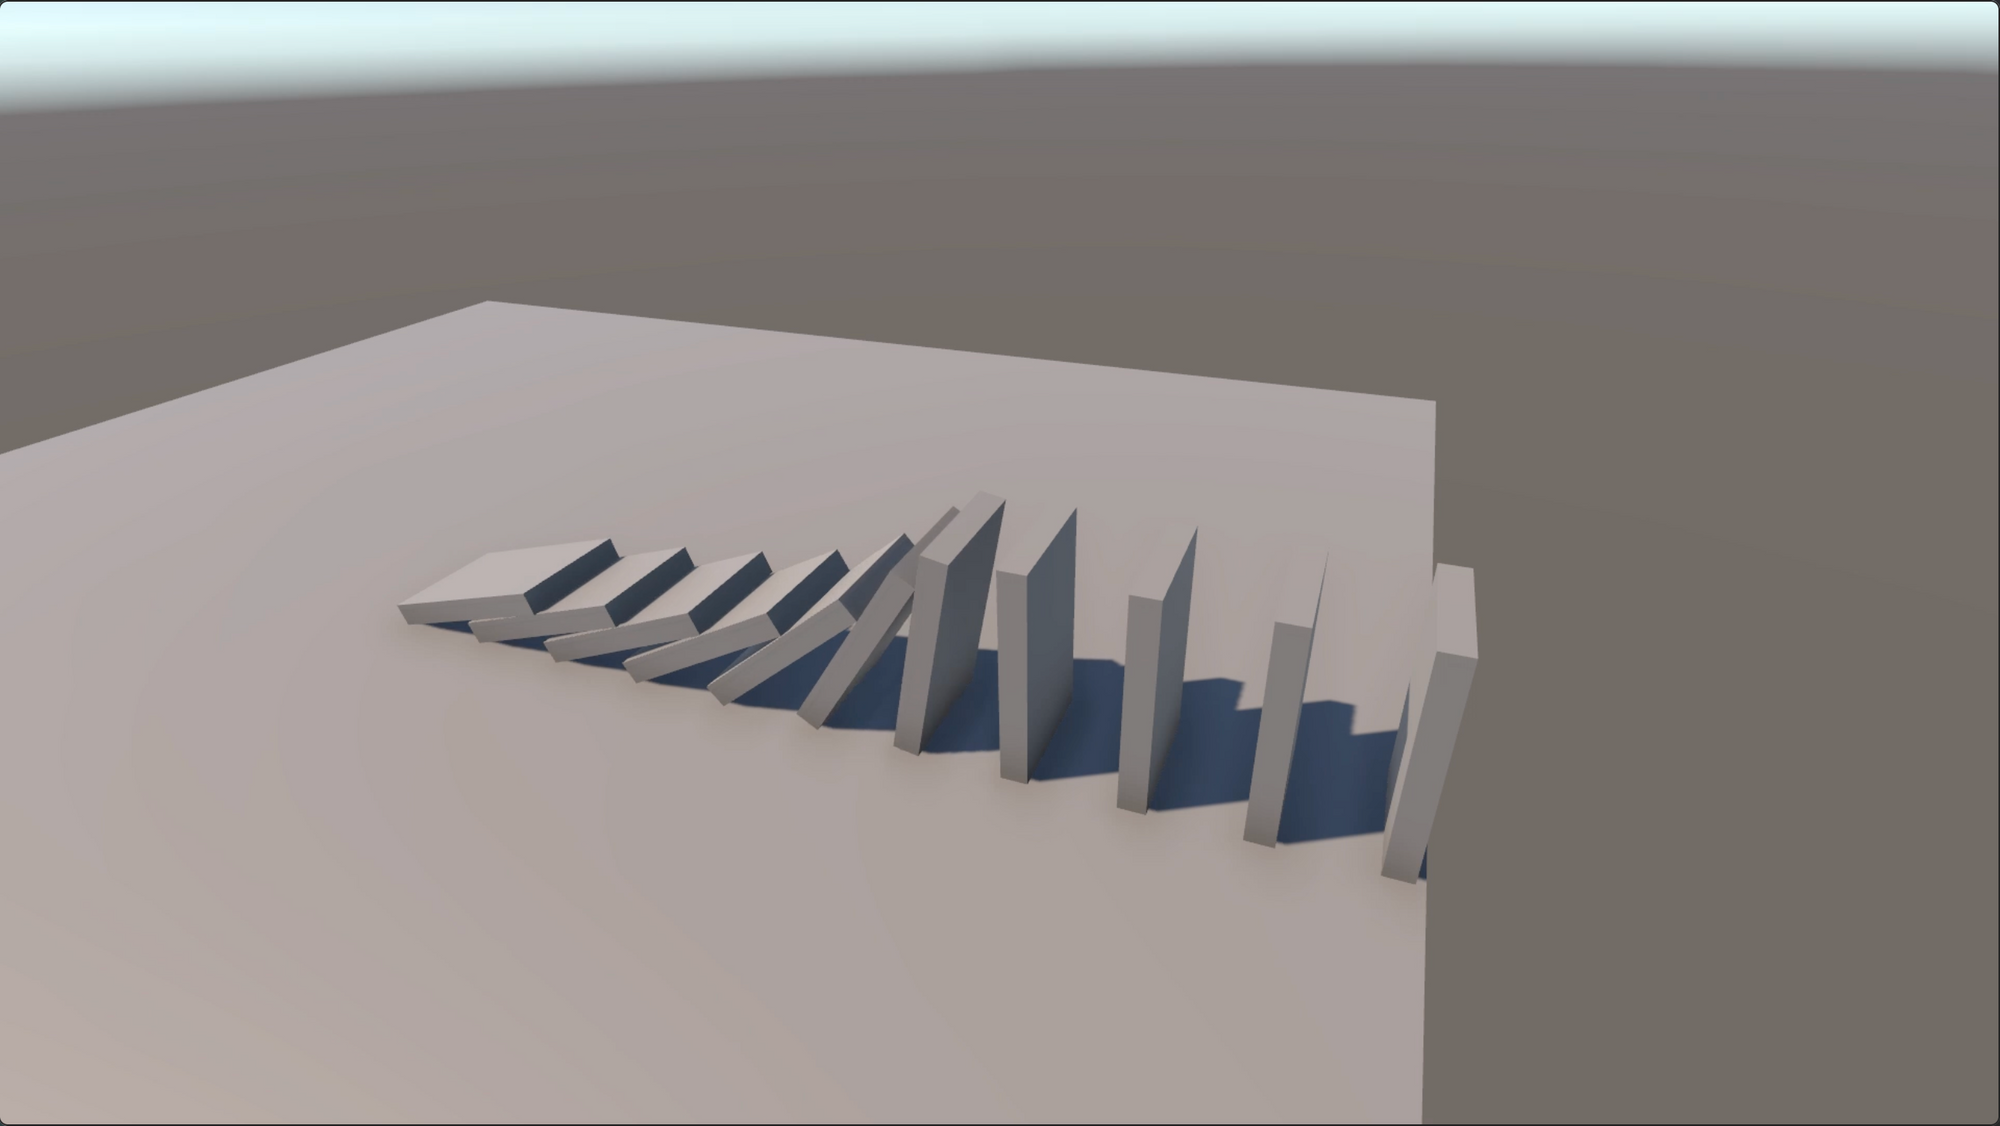 3D art of a domino fall in progress.